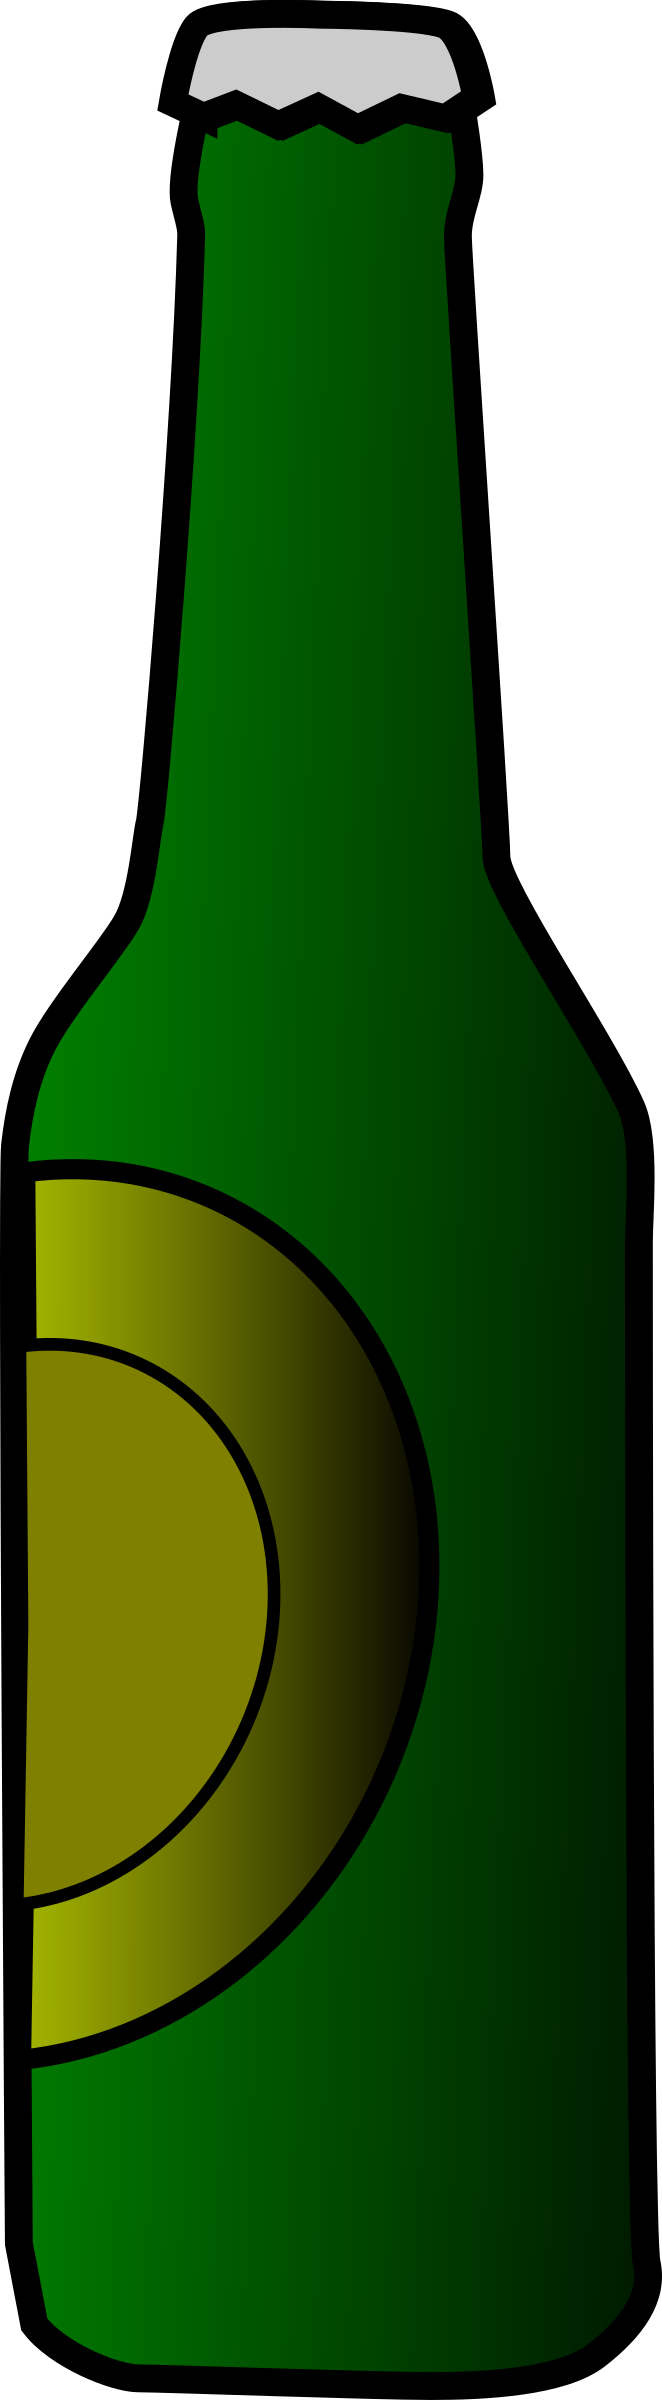 Beer Bottle Clip arts